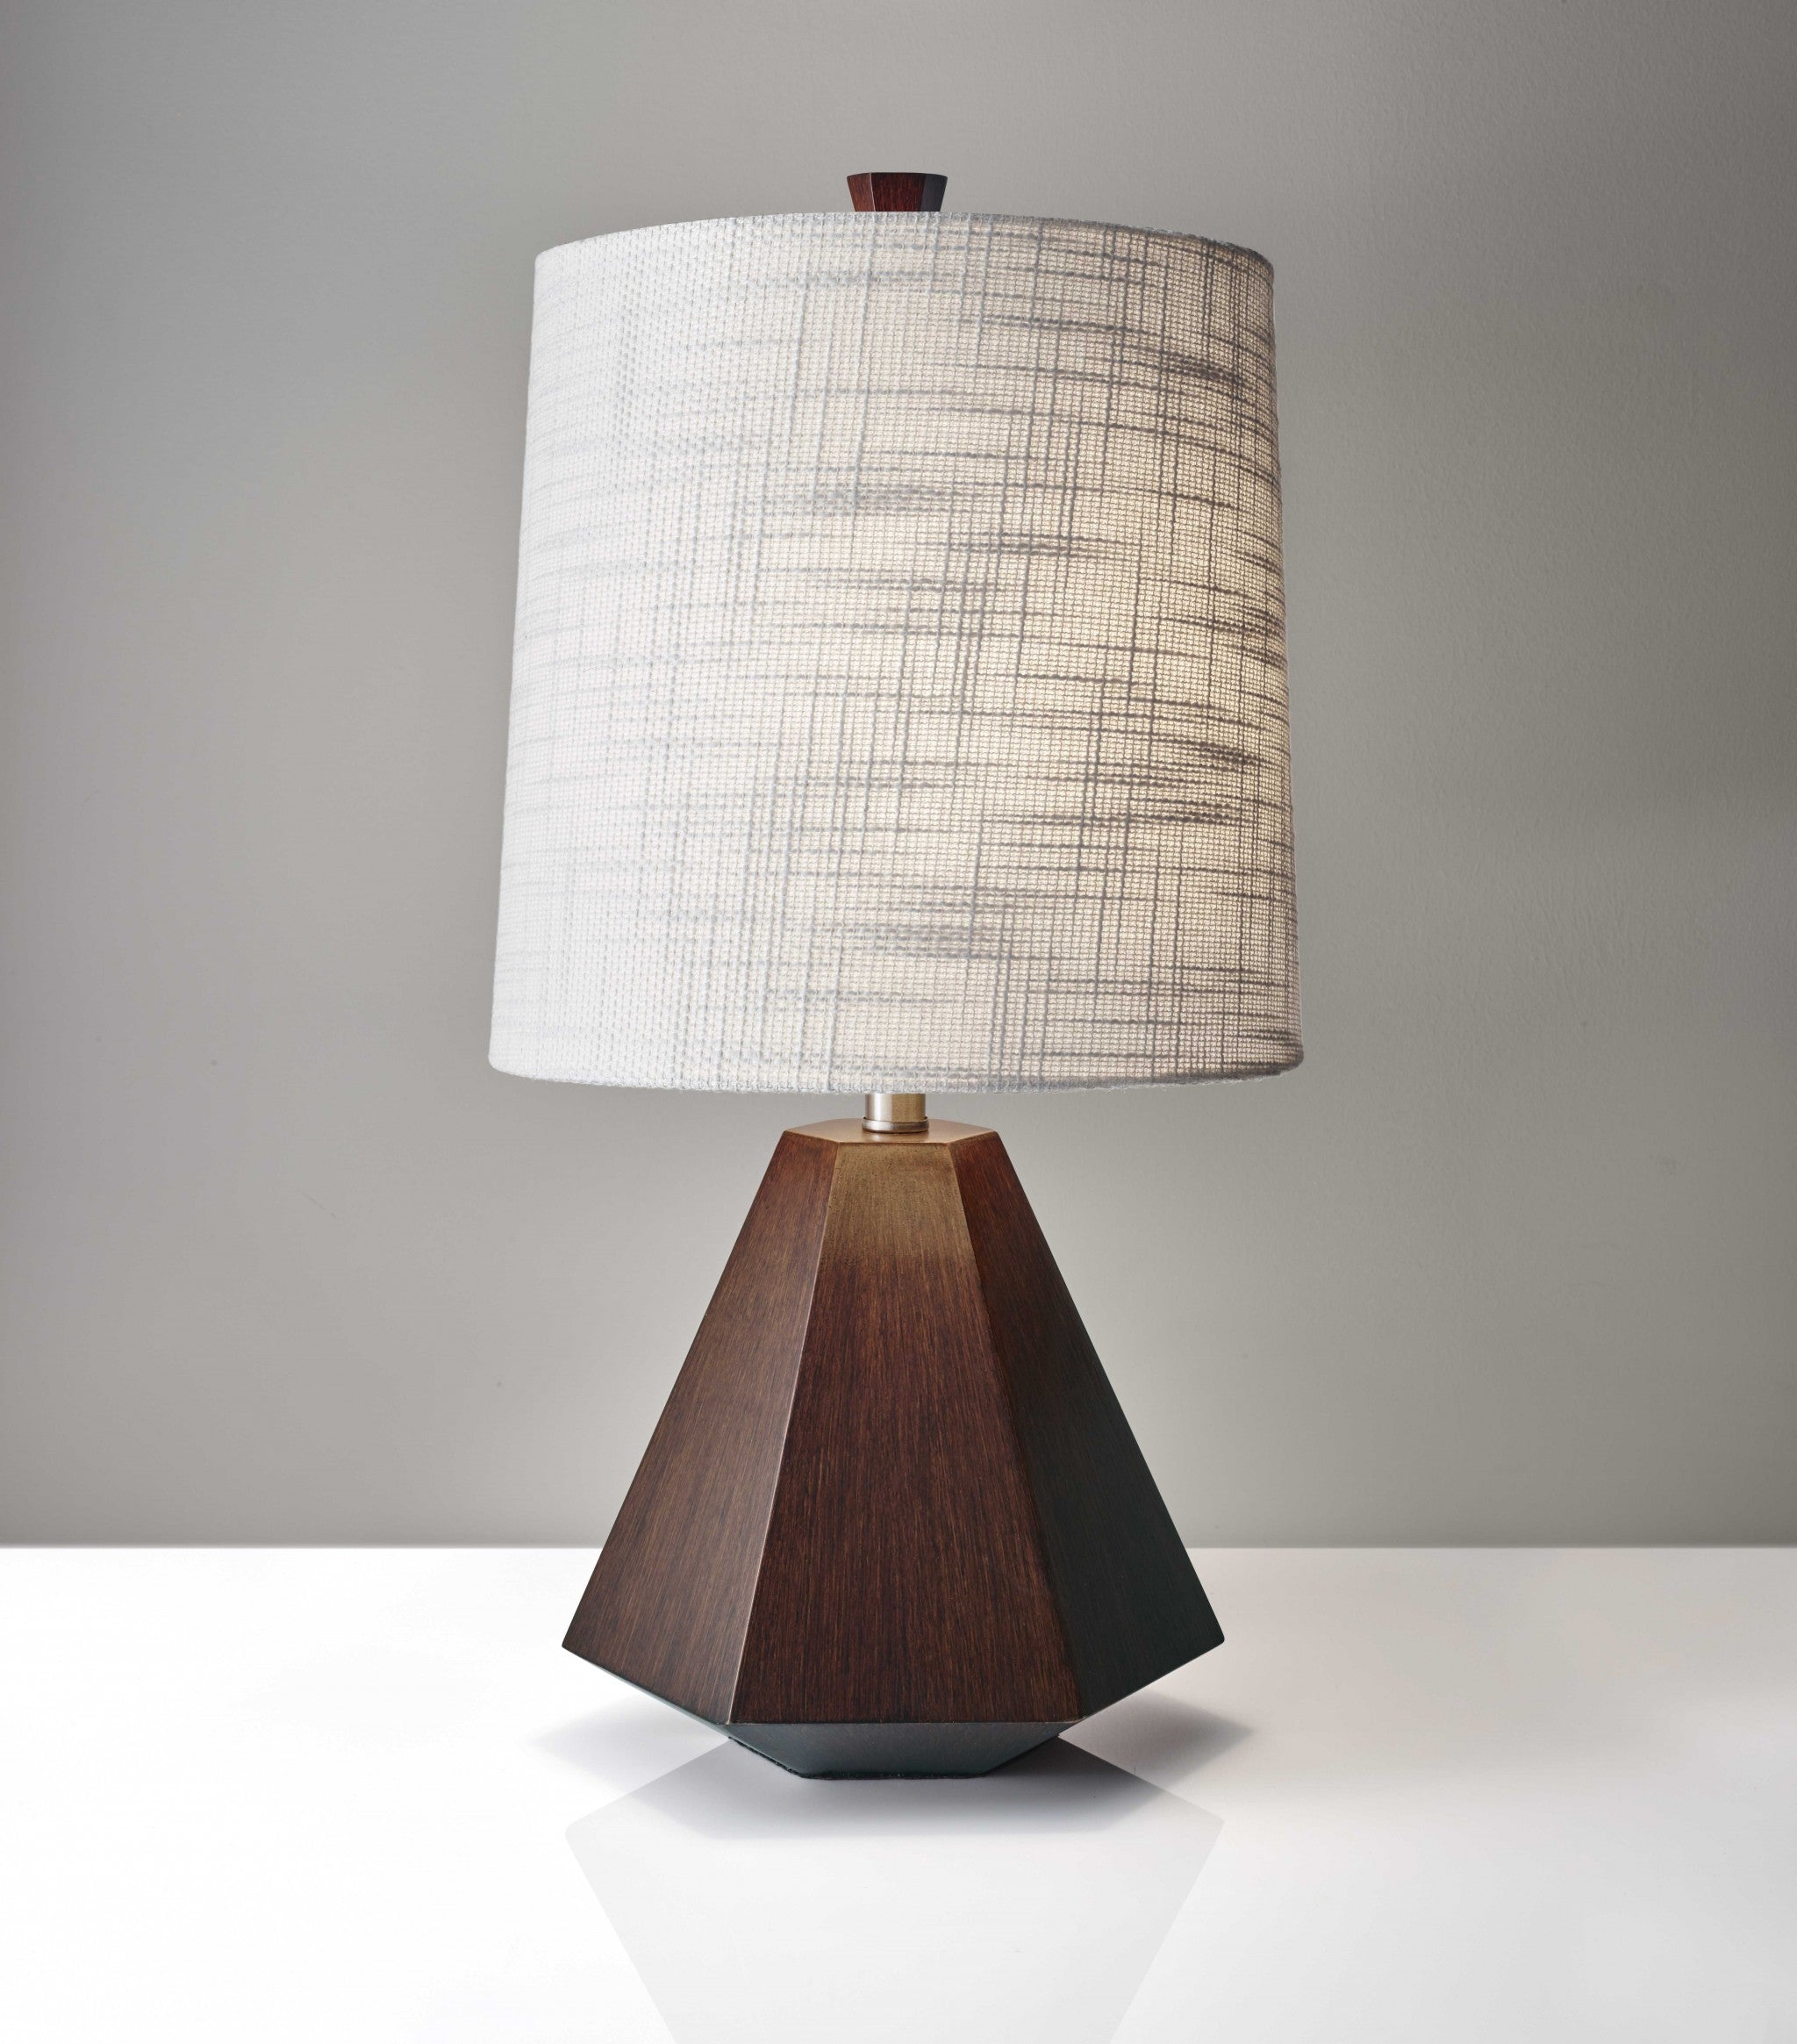 Walnut-Wood-Finish-Geometric-Base-Table-Lamp-Table-Lamps